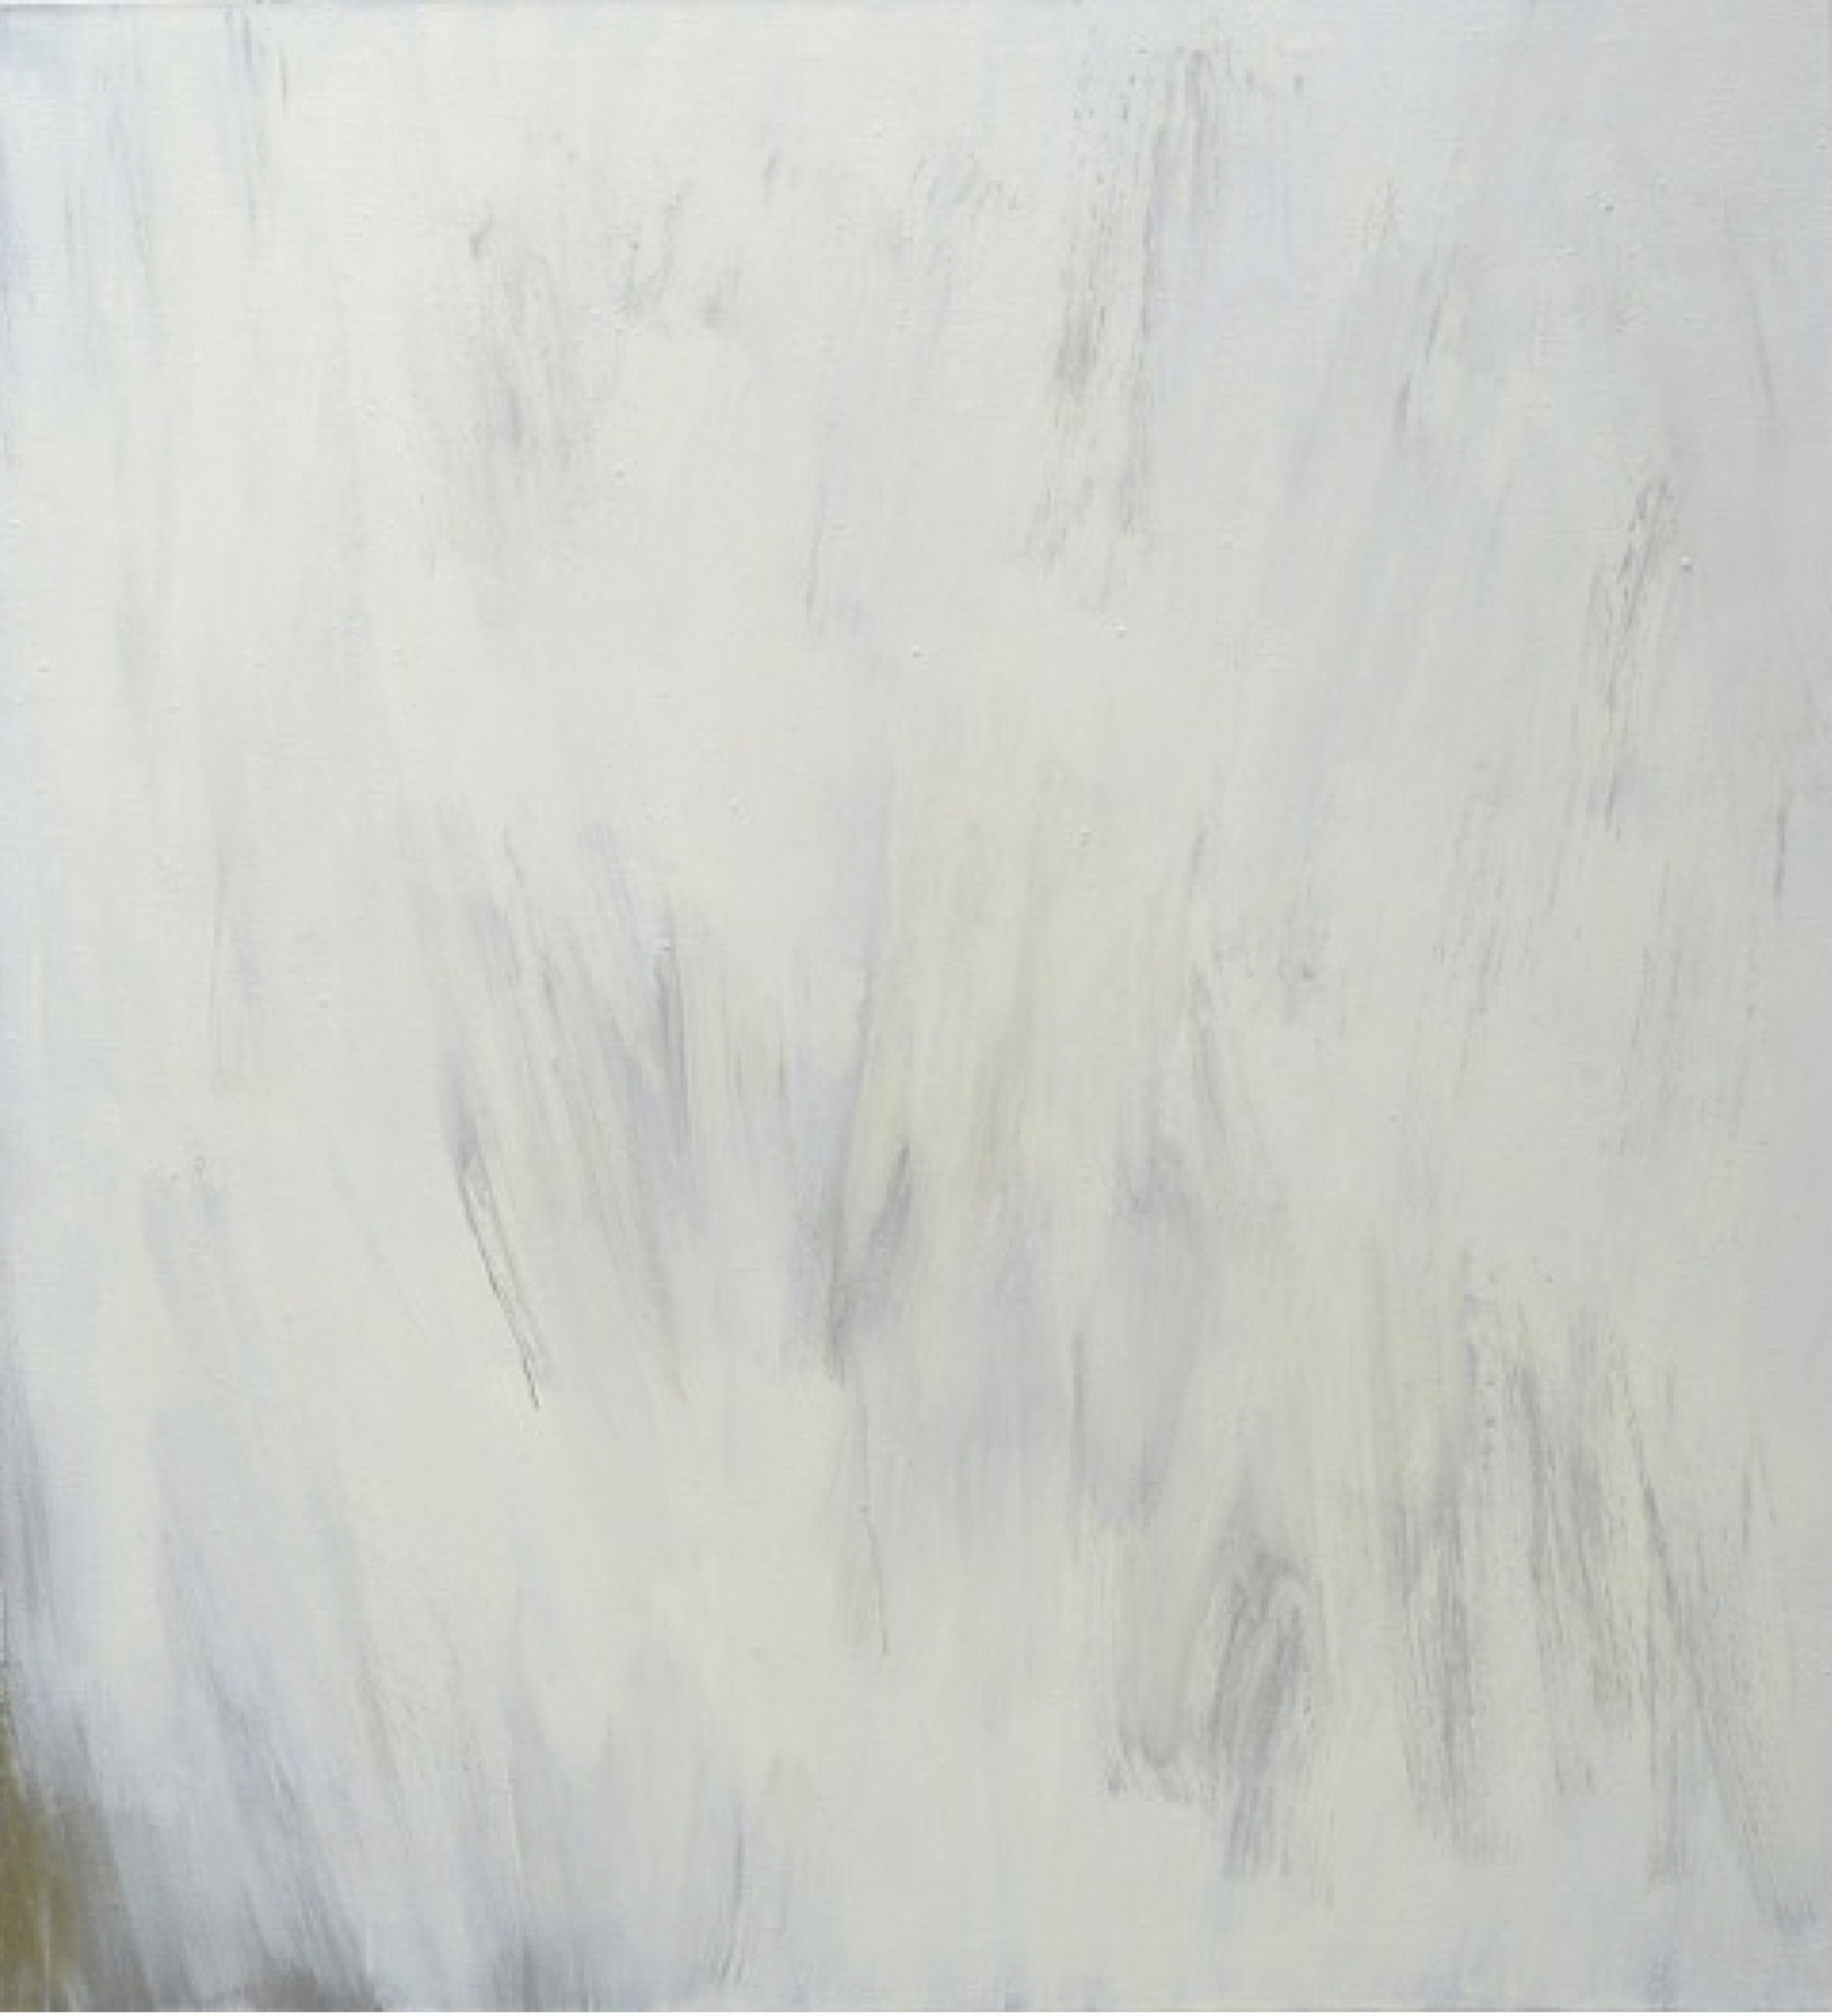 Galerie Floss & Schultz, Raymund Girke, Helle Welt III 2000, 120 x 110 cm